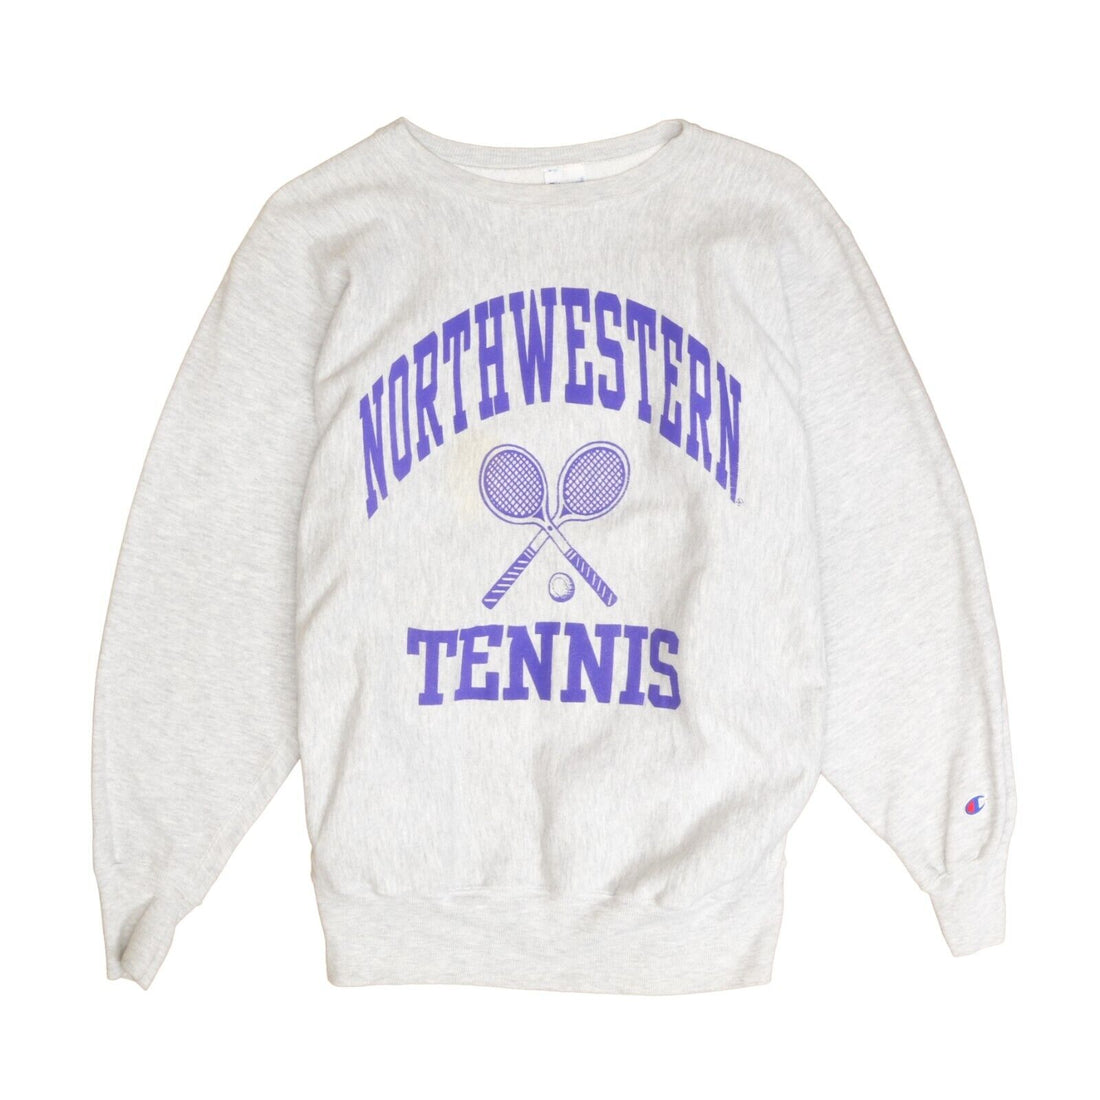 Vintage Northwestern Tennis Champion Reverse Weave Sweatshirt Size XL 90s NCAA